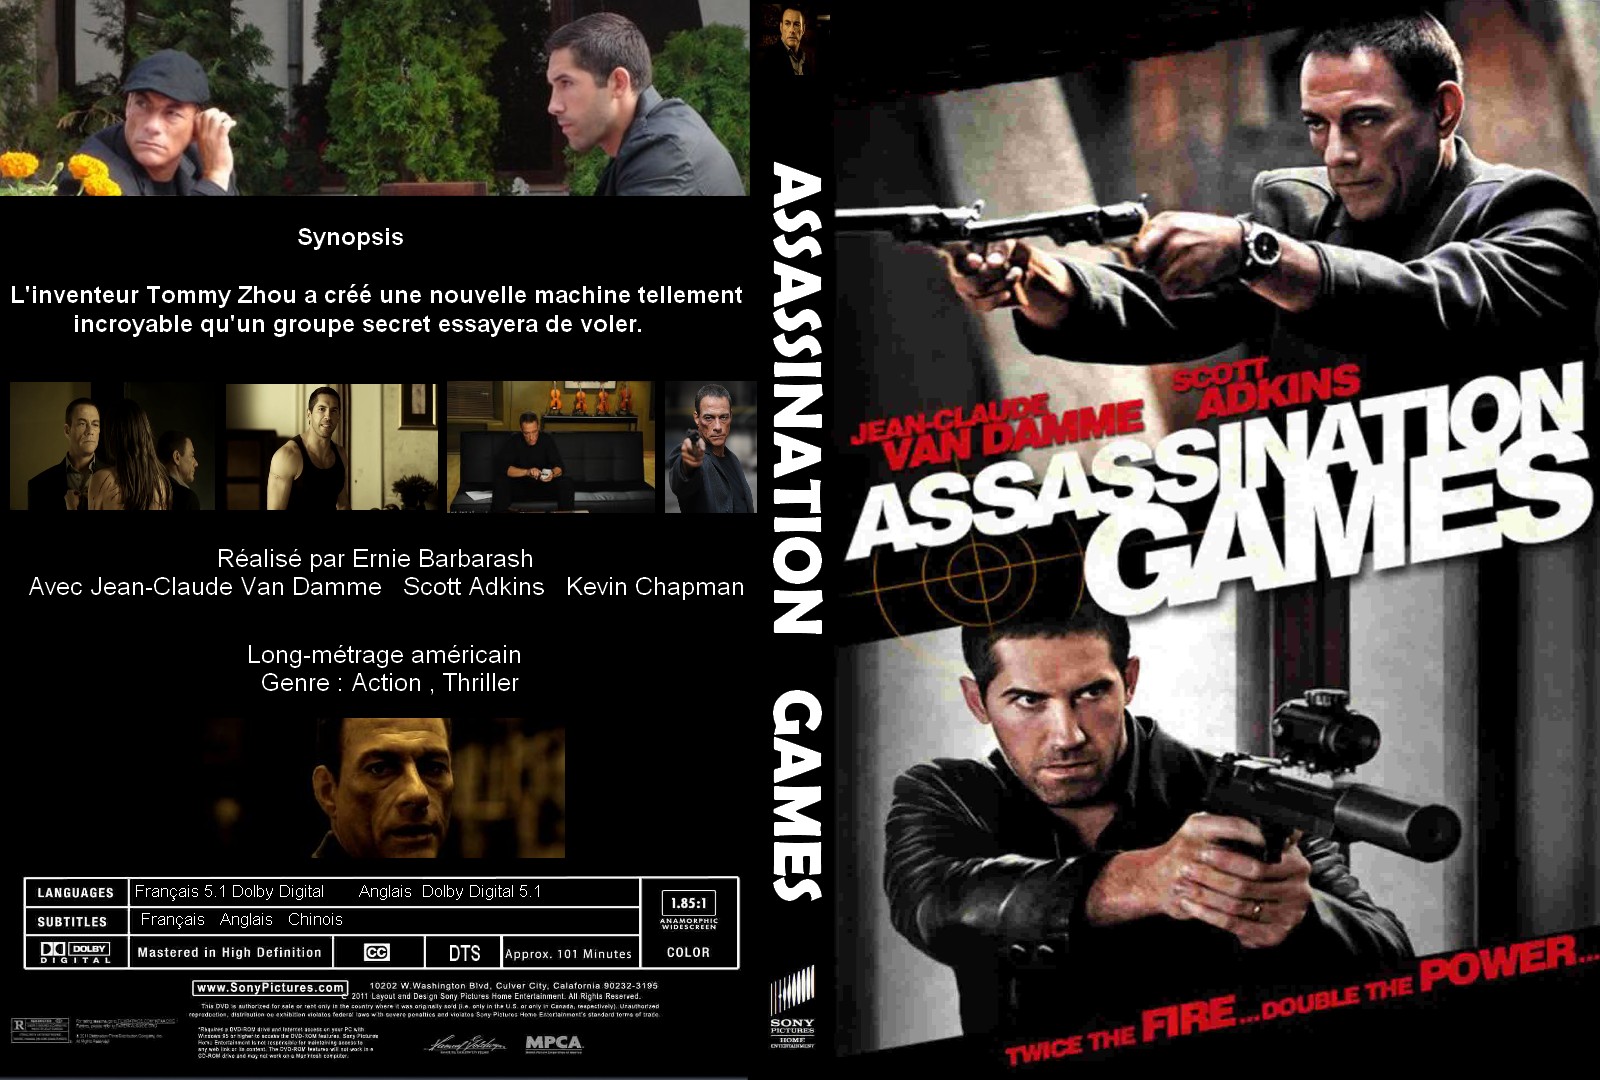 Jaquette DVD Assassination Games custom